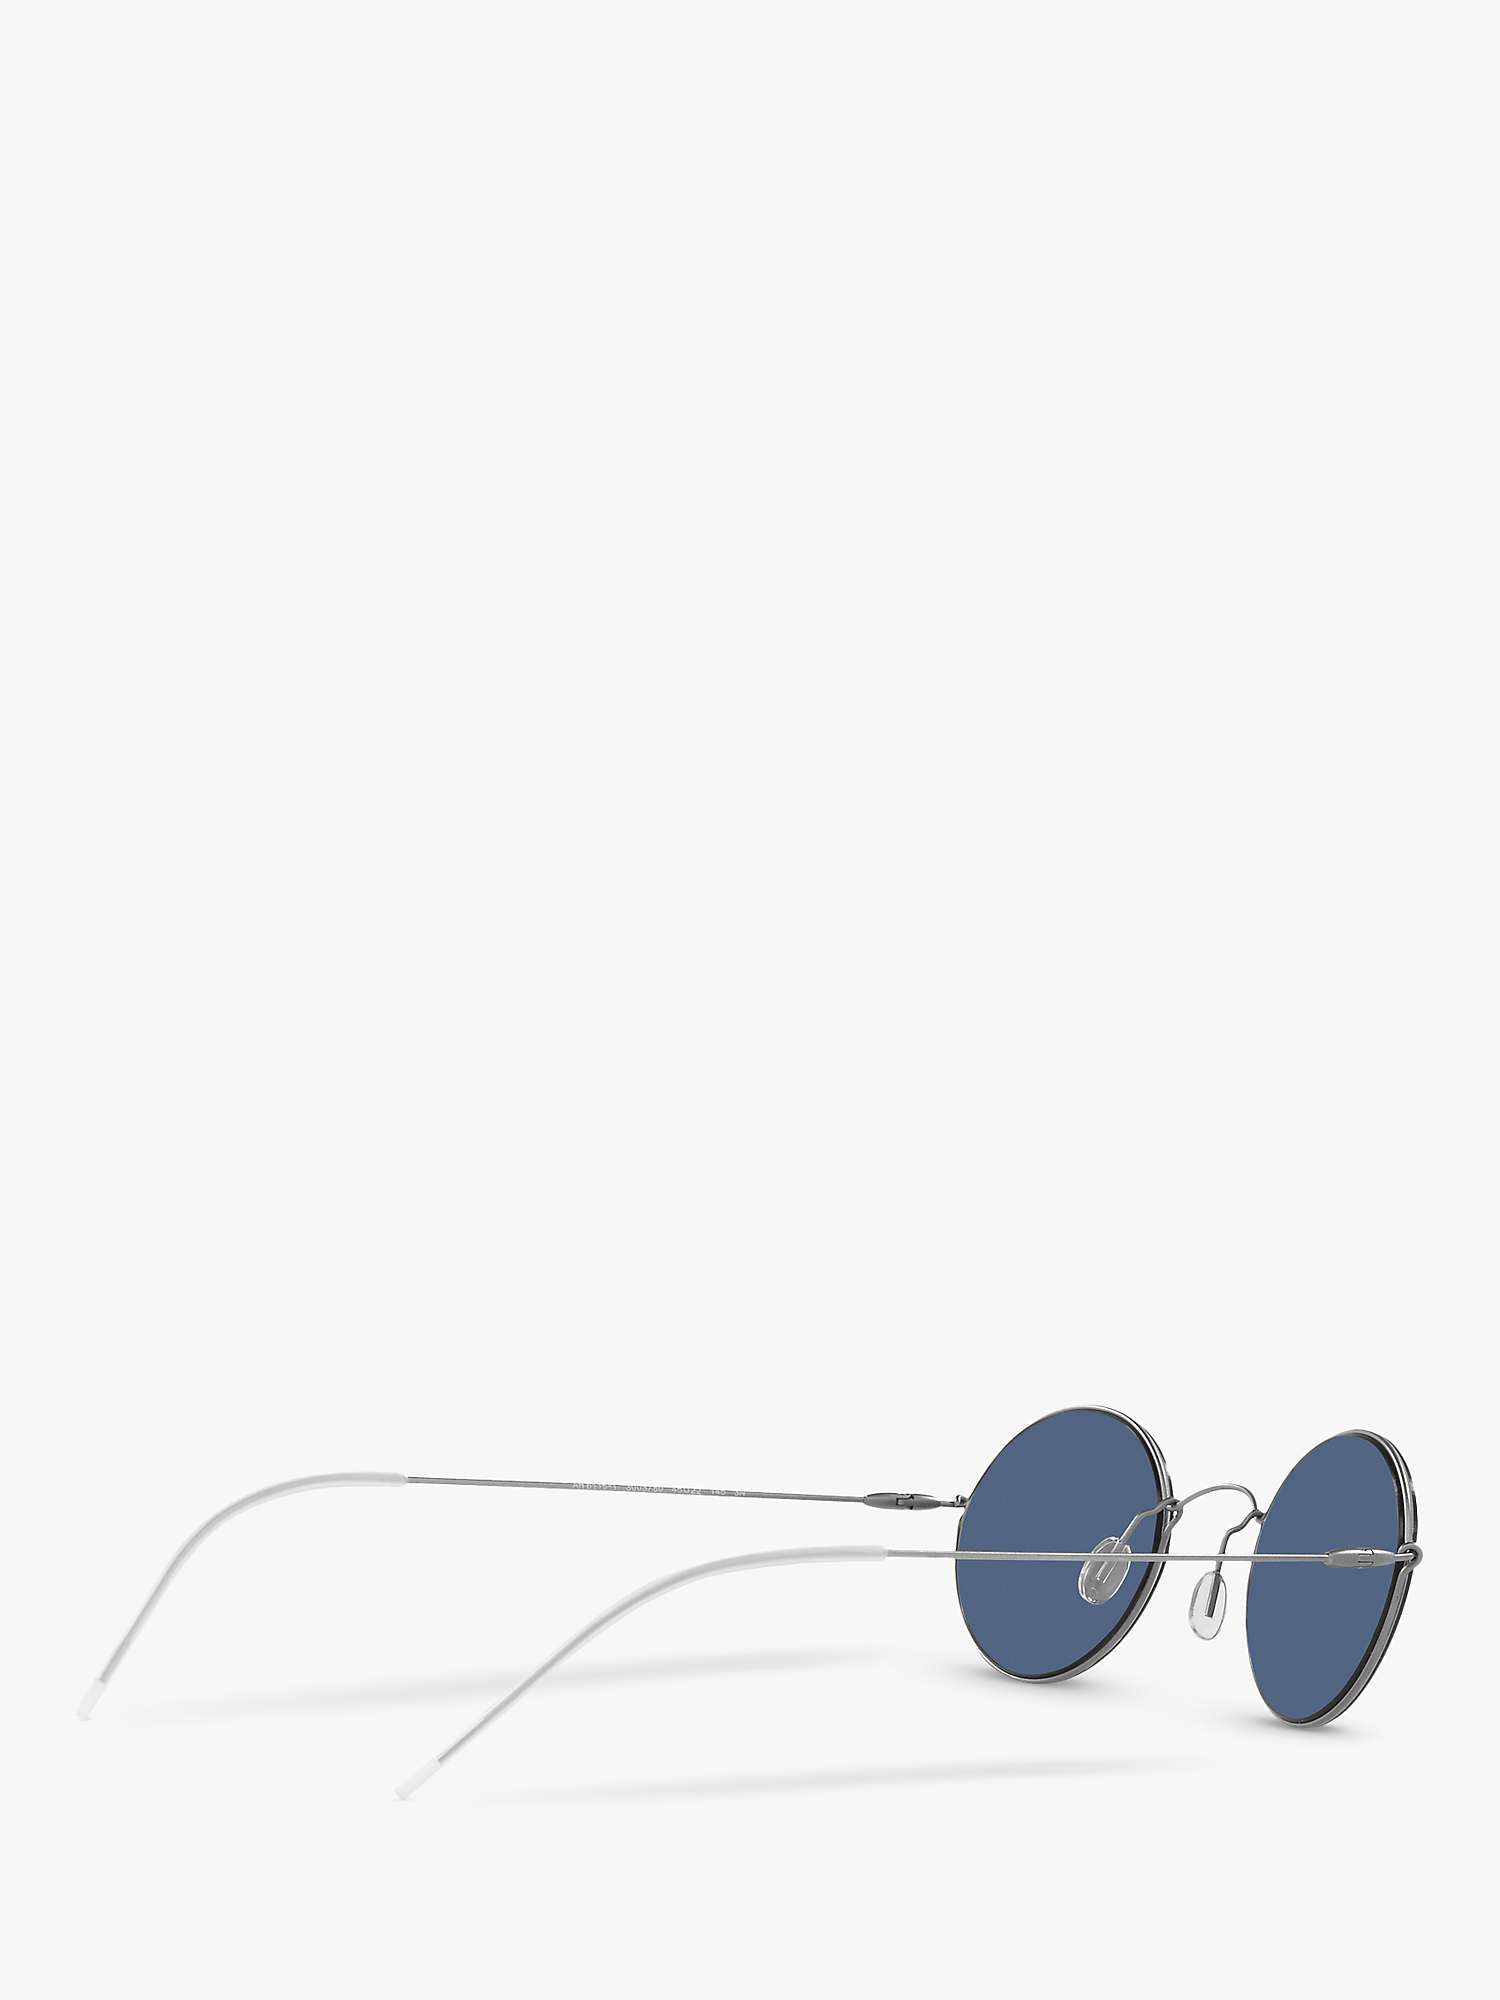 Buy Giorgio Armani AR6115T Men's Oval Sunglasses, Grey/Blue Online at johnlewis.com